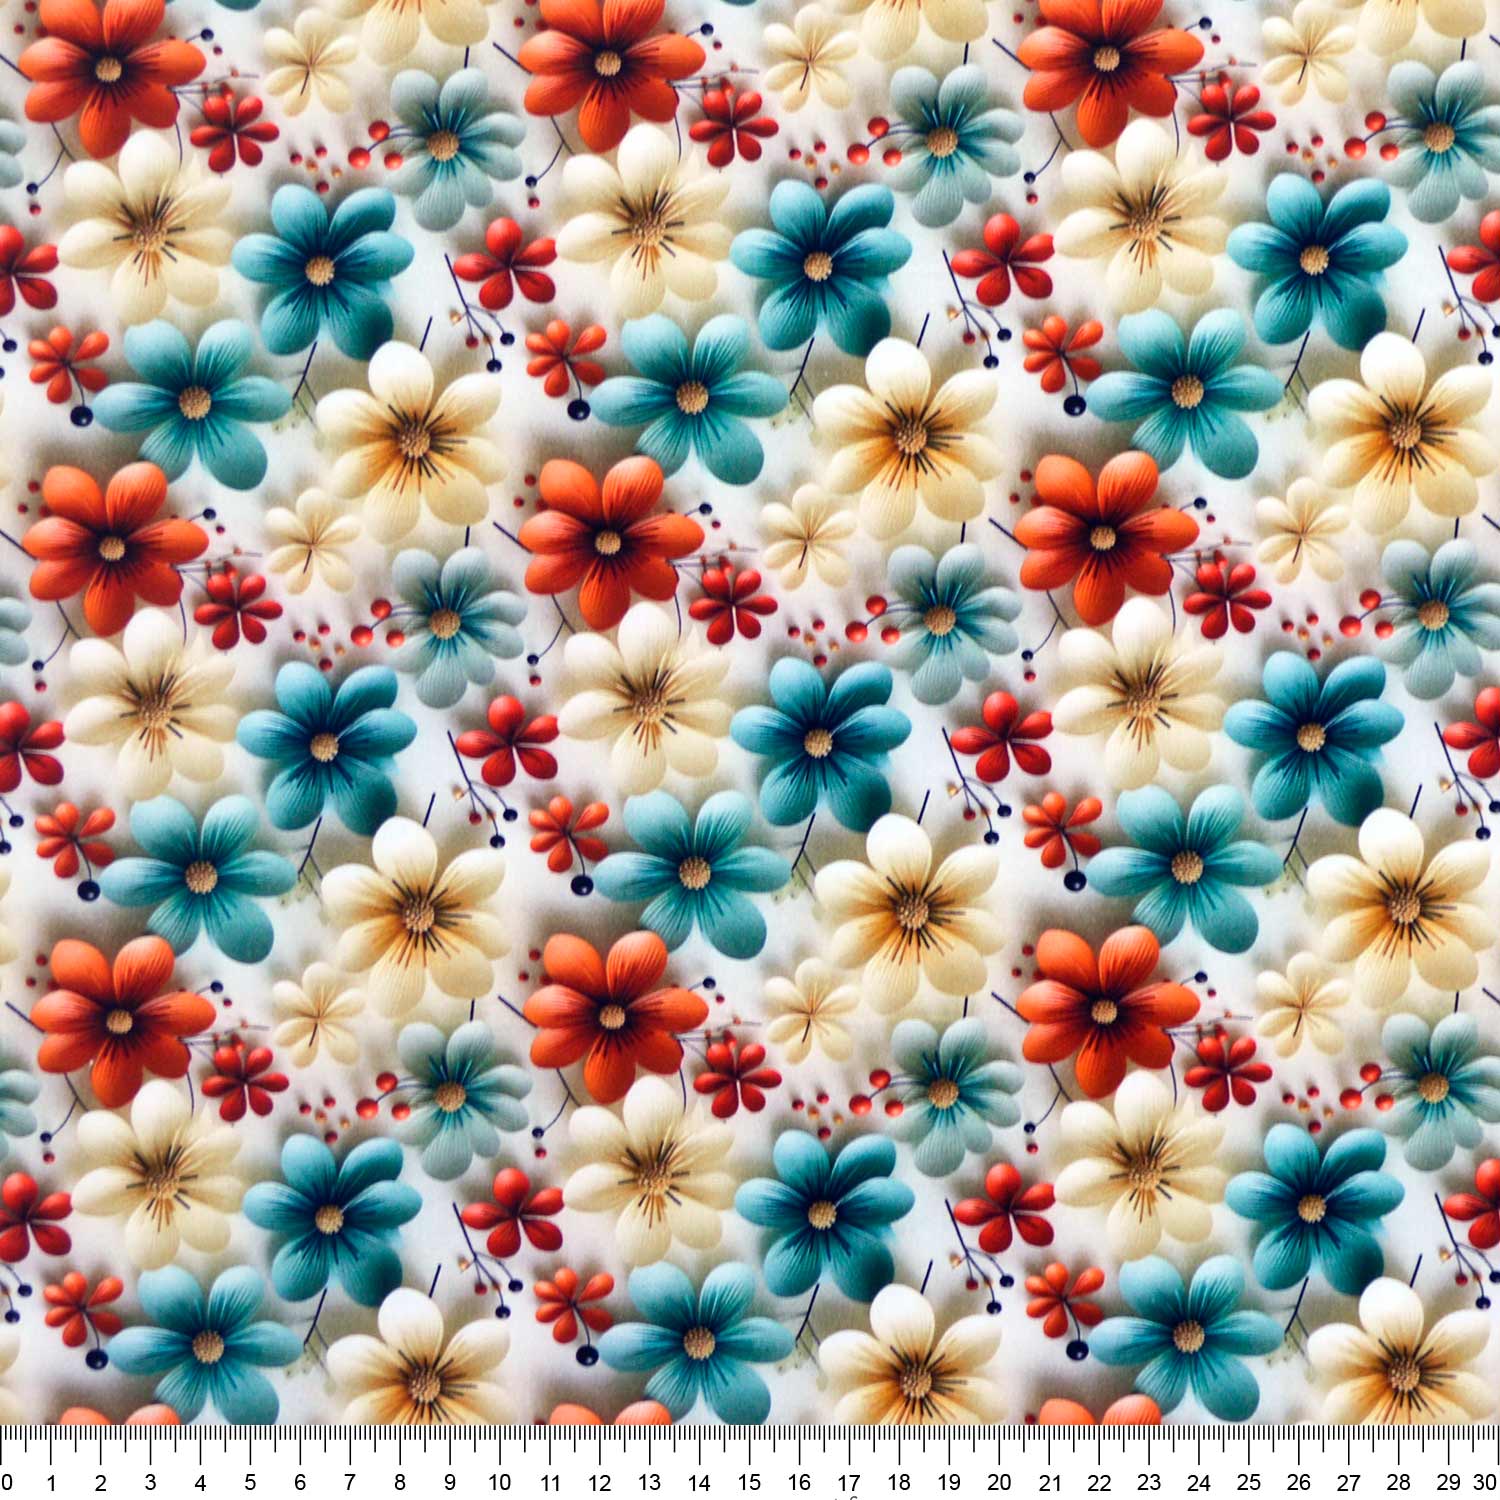 tecido-tricoline-estampado-digital-3d-floral-helana-della-aviamentos-tecidos-caldeira-capa-r-11046